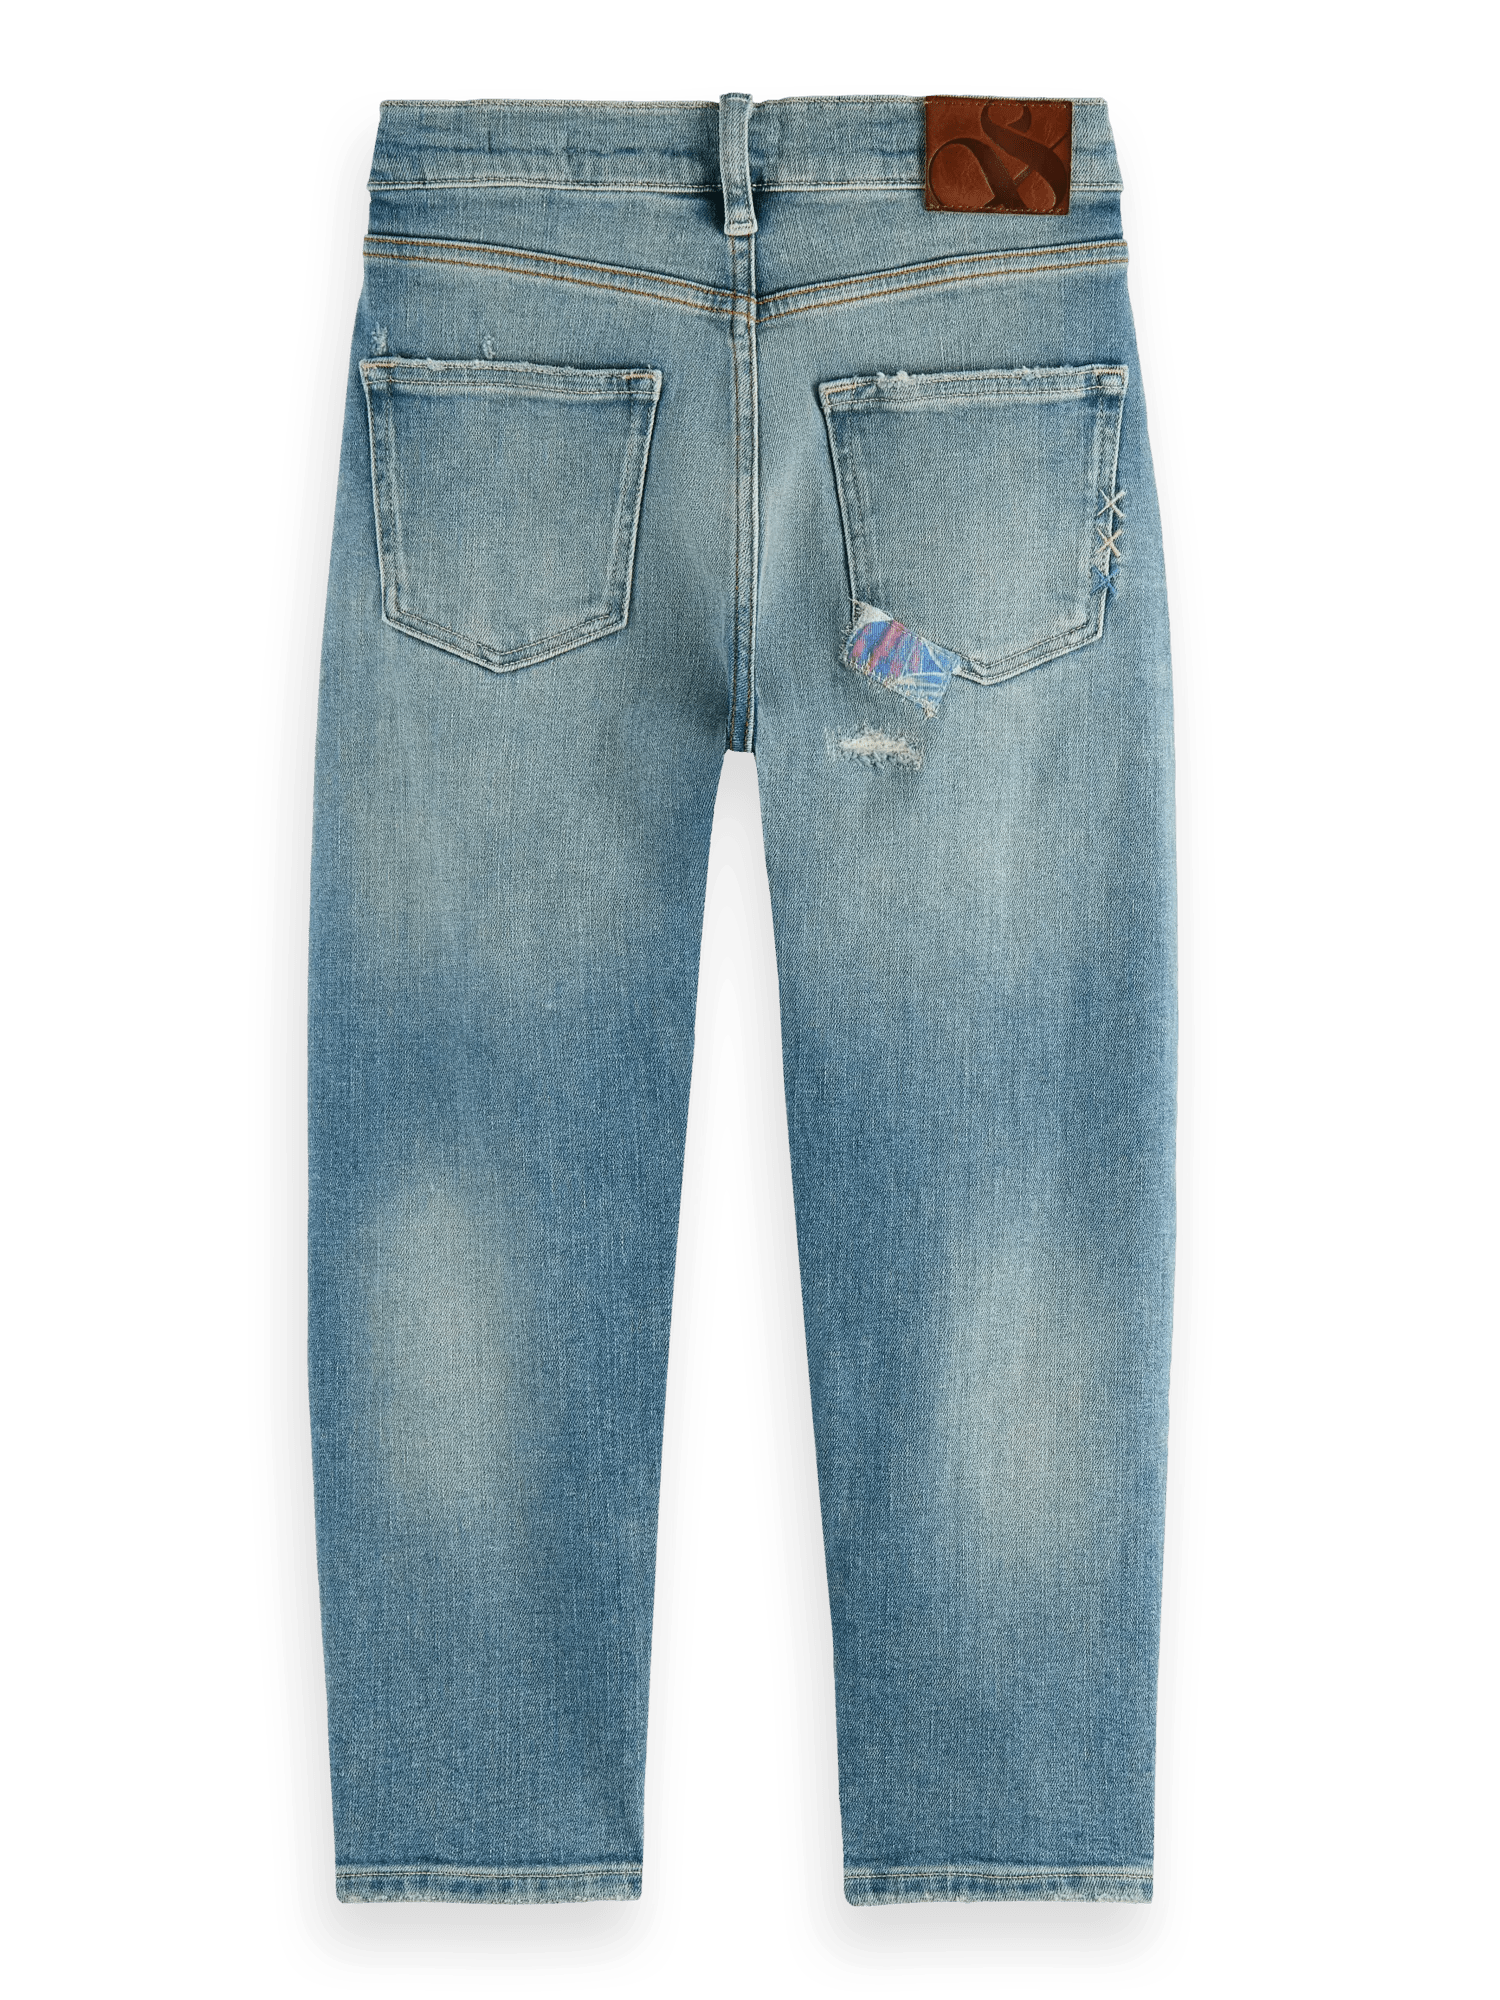 Scotch & Soda The Strand super loose jeans — New Grunge BCK